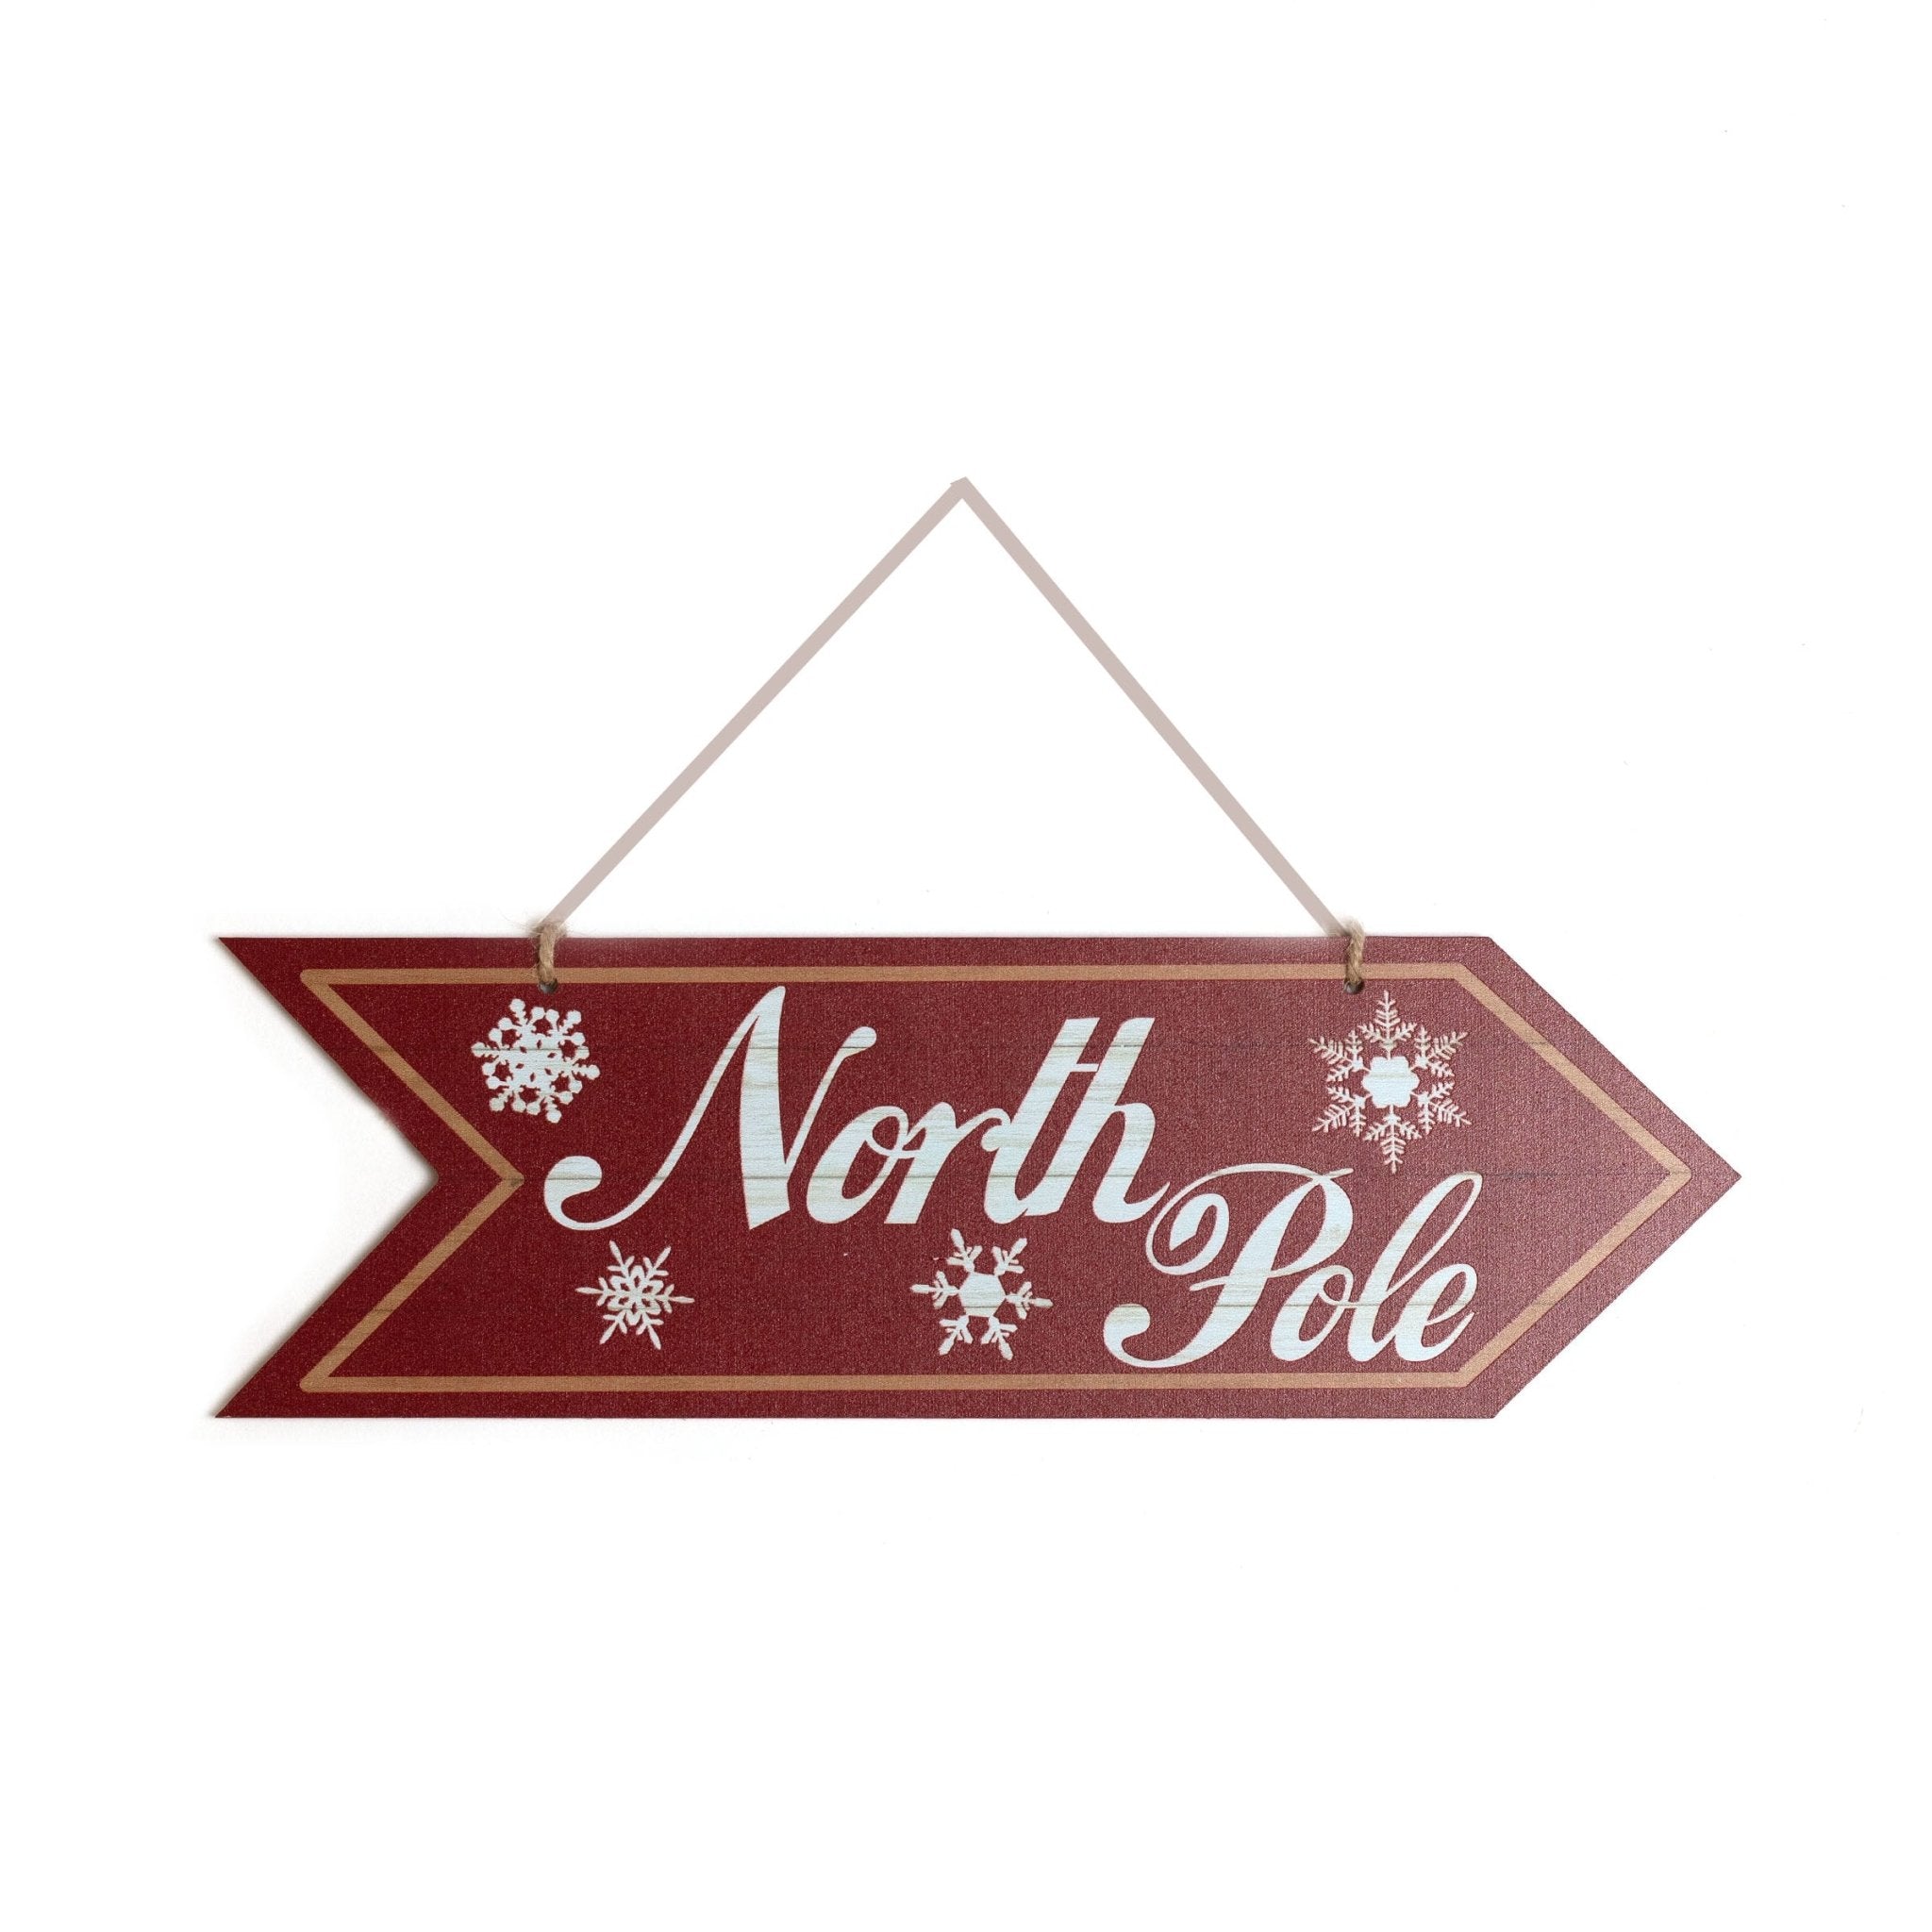 North Pole Arrow Wooden Sign 10x24cm 1024001 - MODA FLORA Santa's Workshop